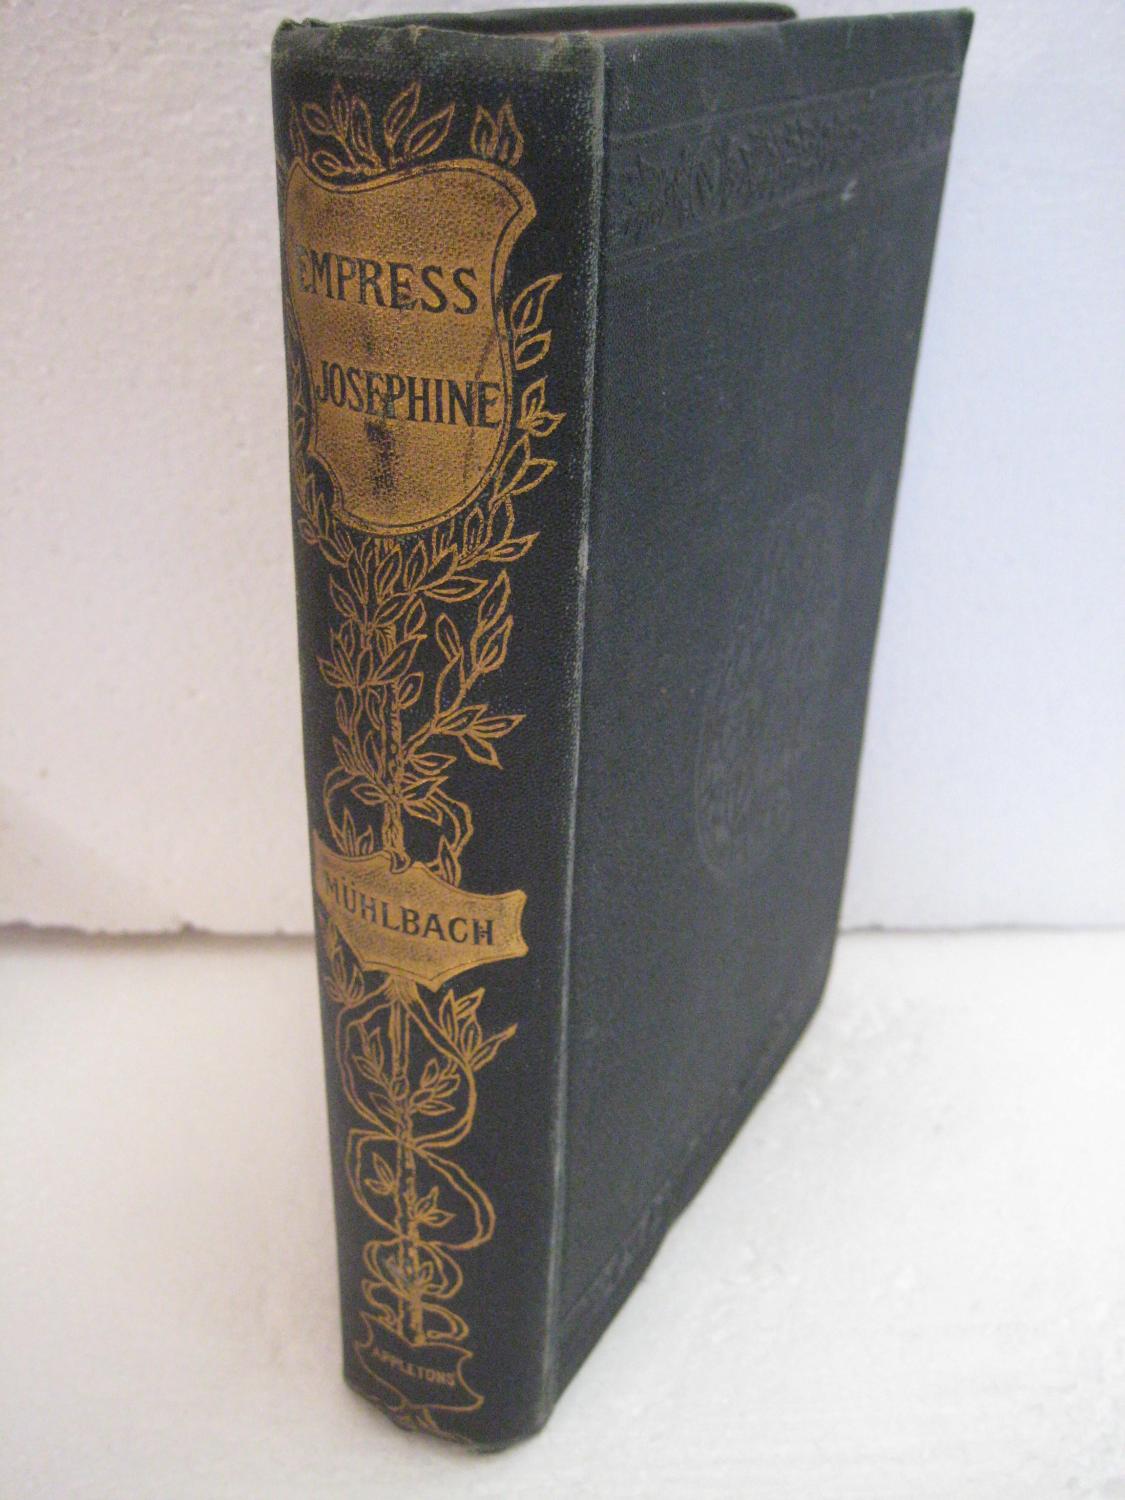 The Empress Josephine book image